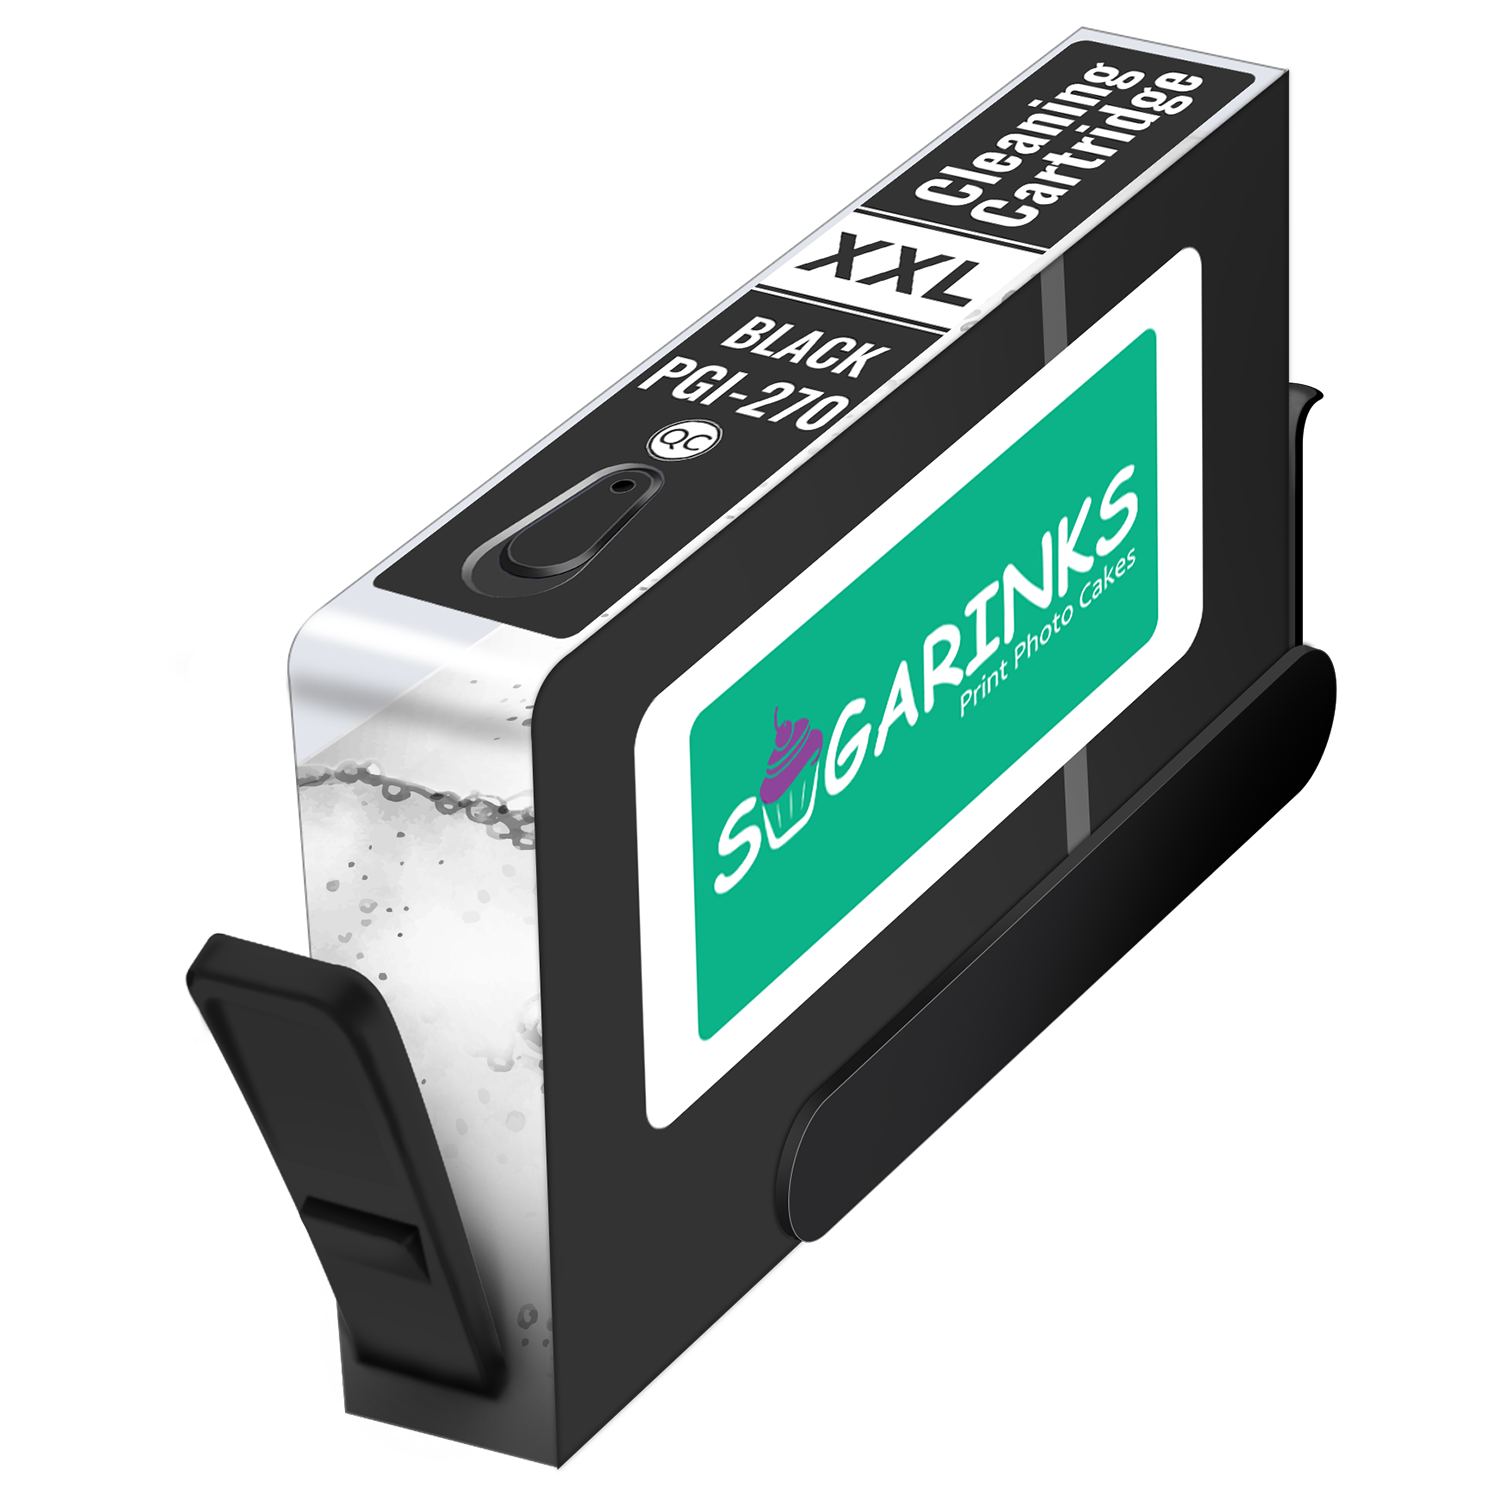 Sugarinks Edible Cleaning Cartridge PGI-270XL for Canon Edible Printer – Black